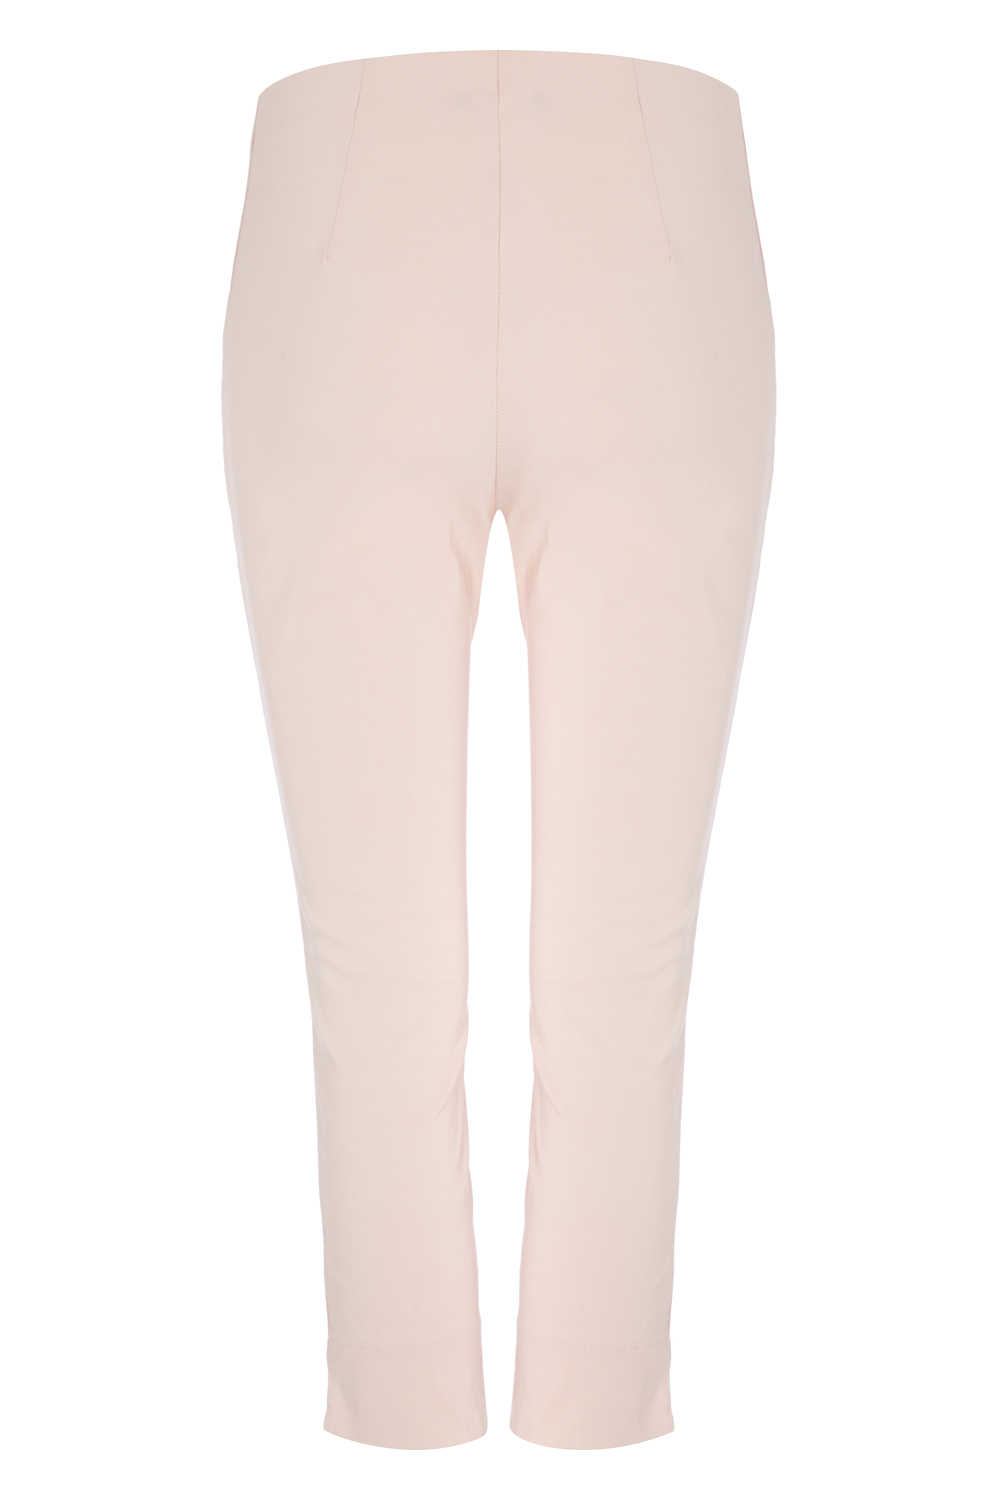 Bengaline Cropped Trousers in Pink - Roman Originals UK